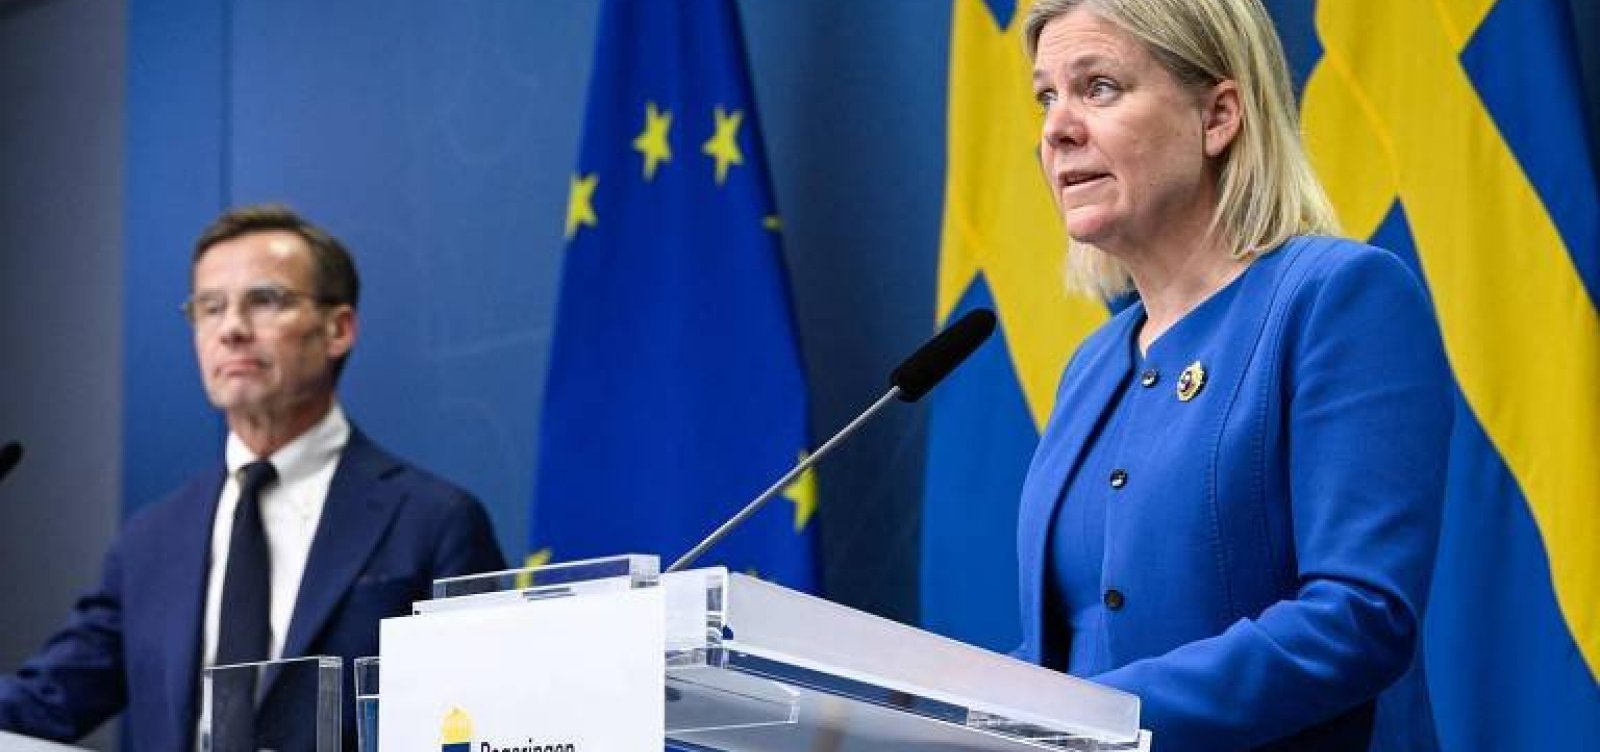 Após Finlândia, Suécia formaliza pedido para entrar na Otan